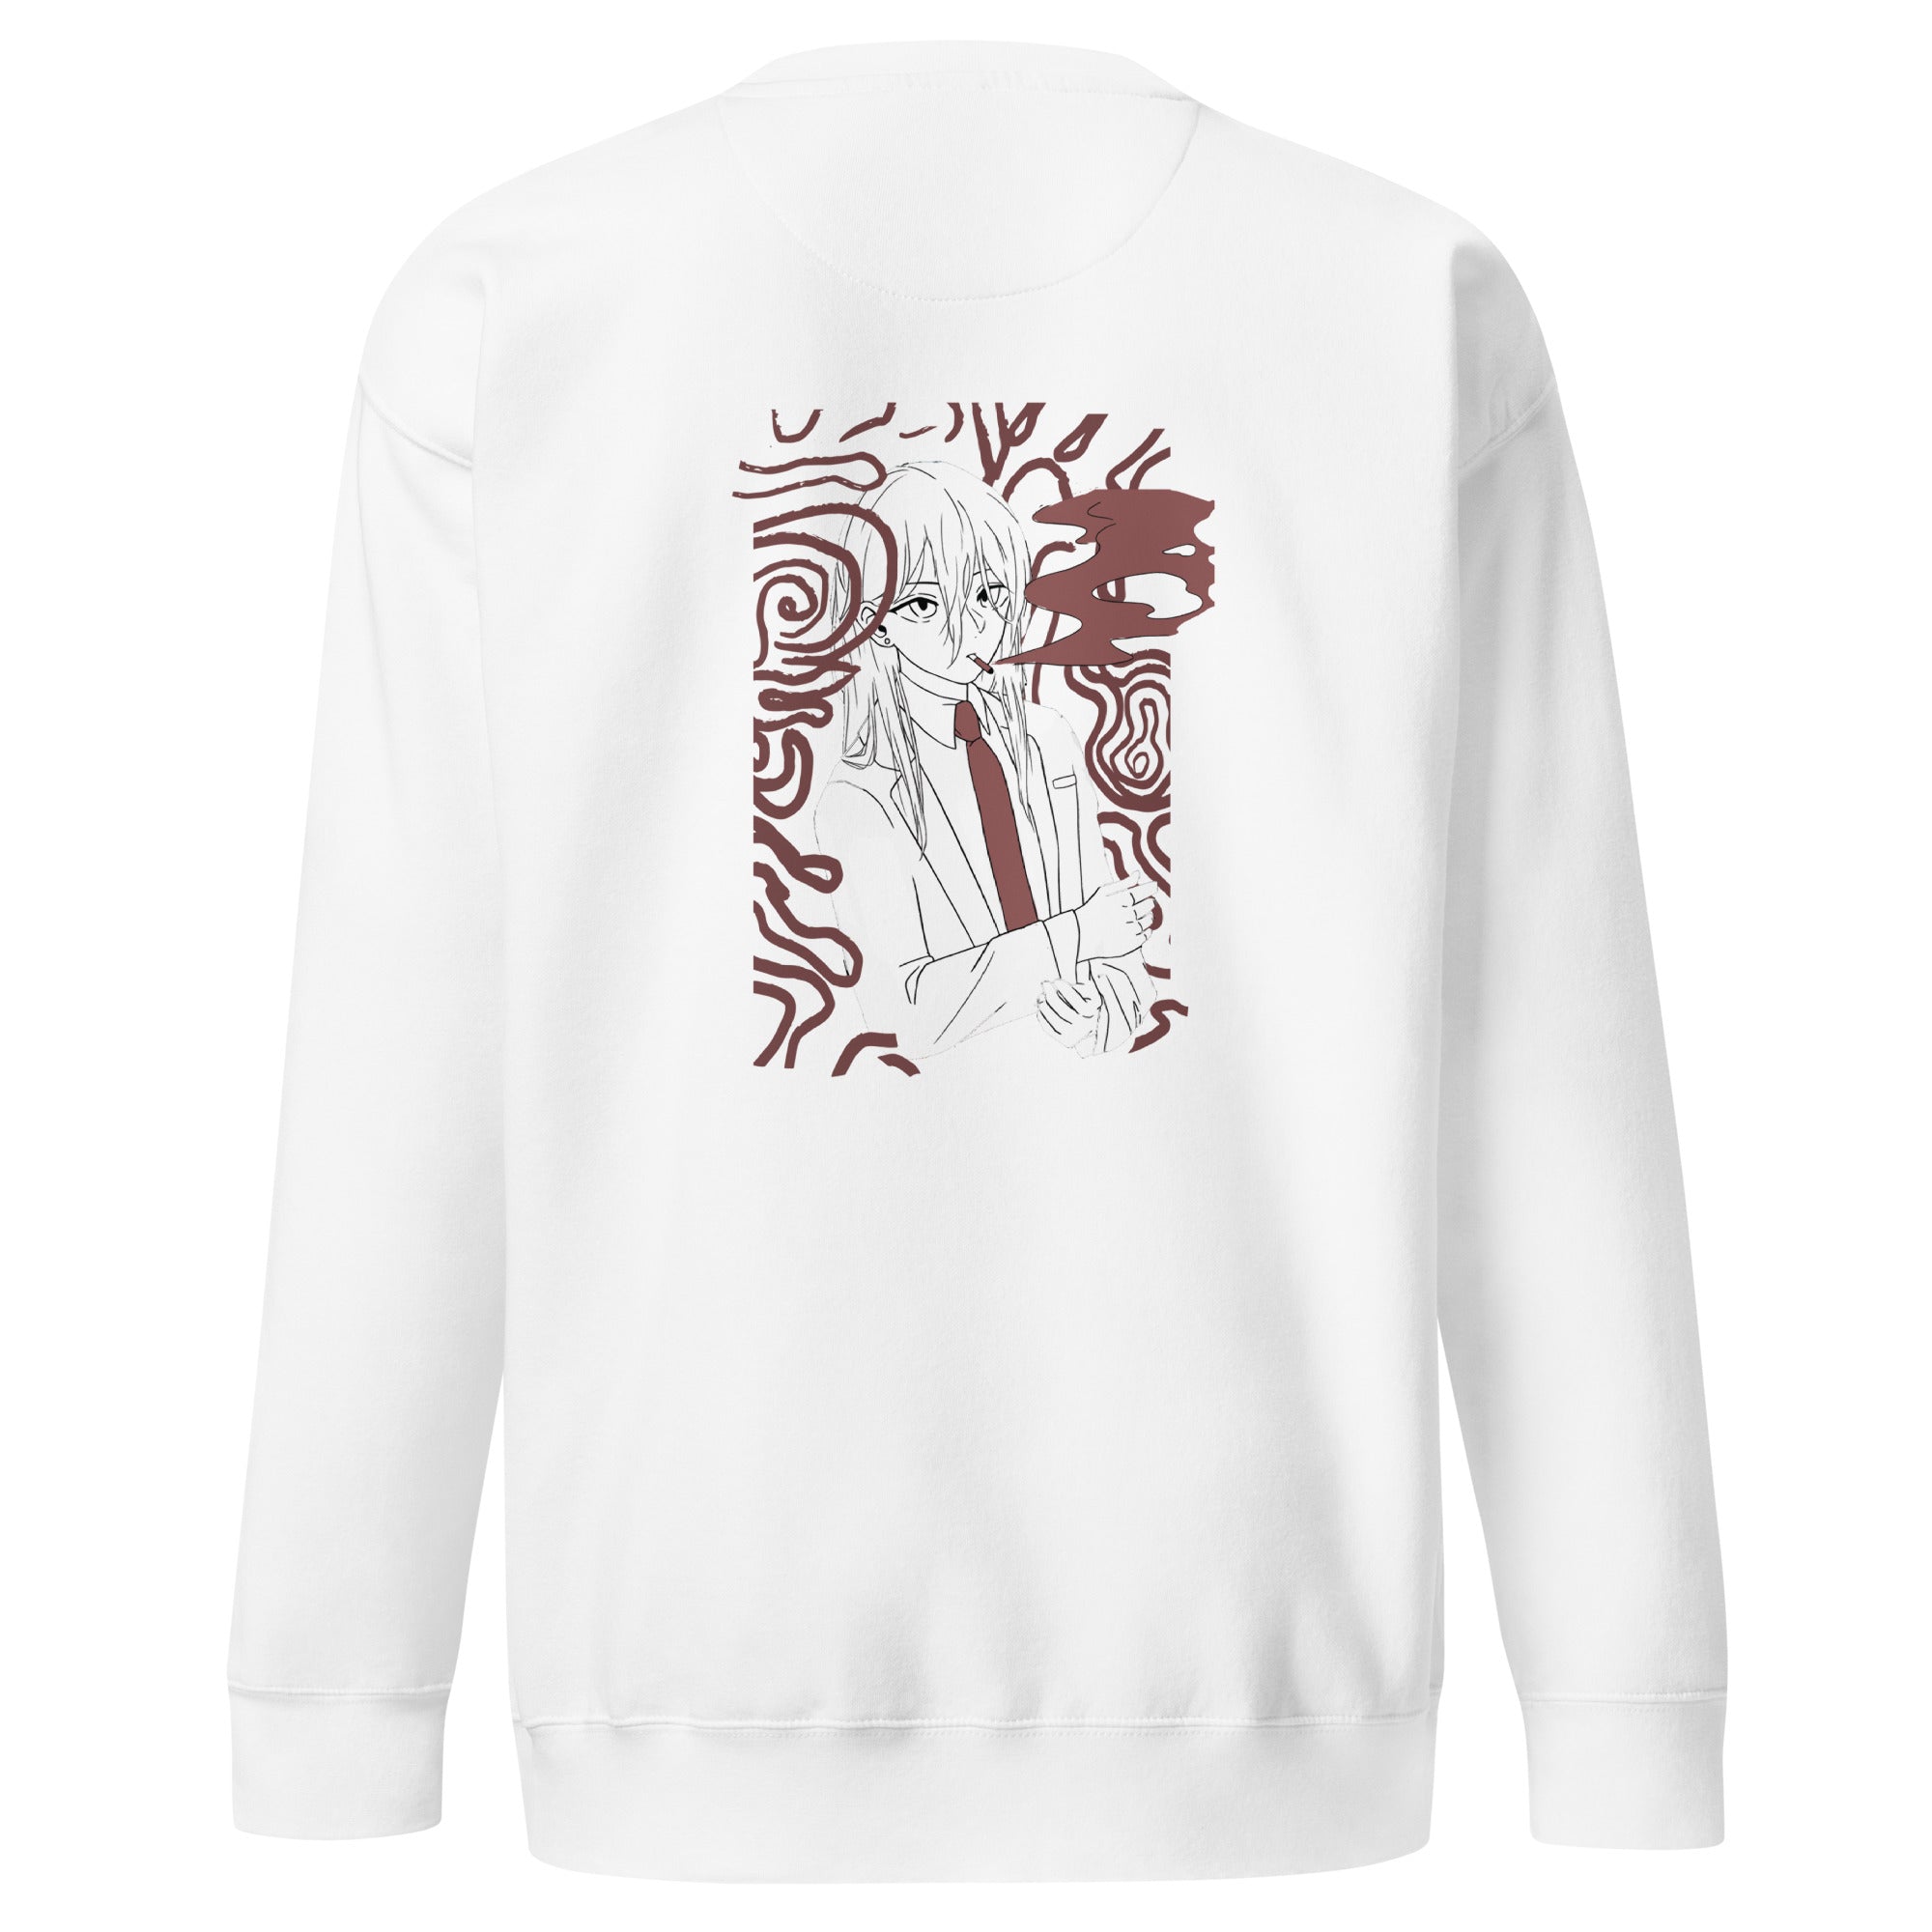 Breaktime • anime sweatshirt - Jackler - anime-inspired streetwear - anime clothing